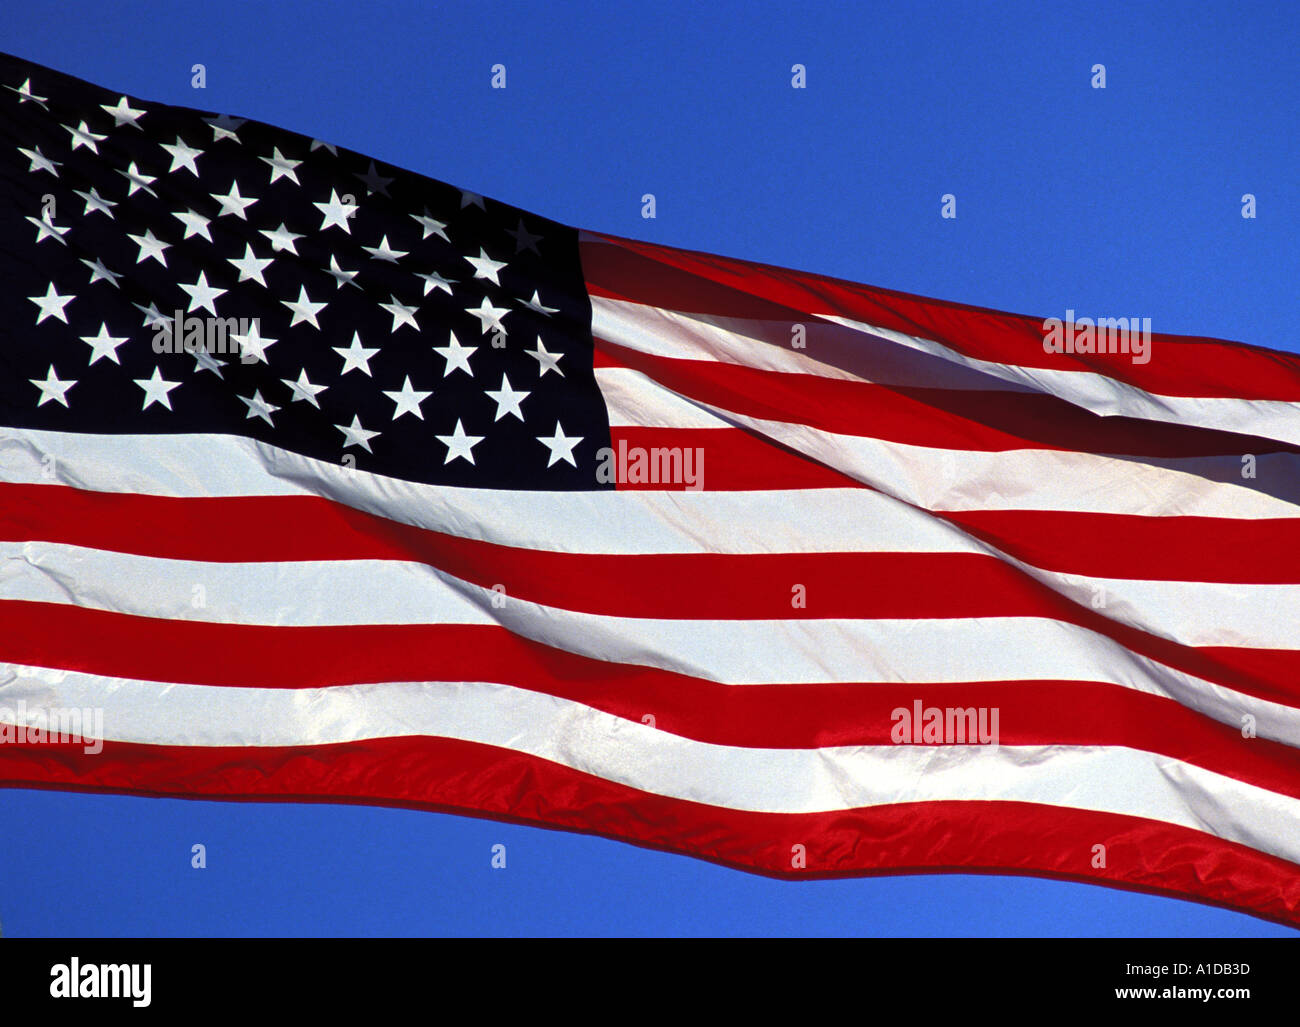 USA flag, stars and stripes against a blue sky Stock Photo